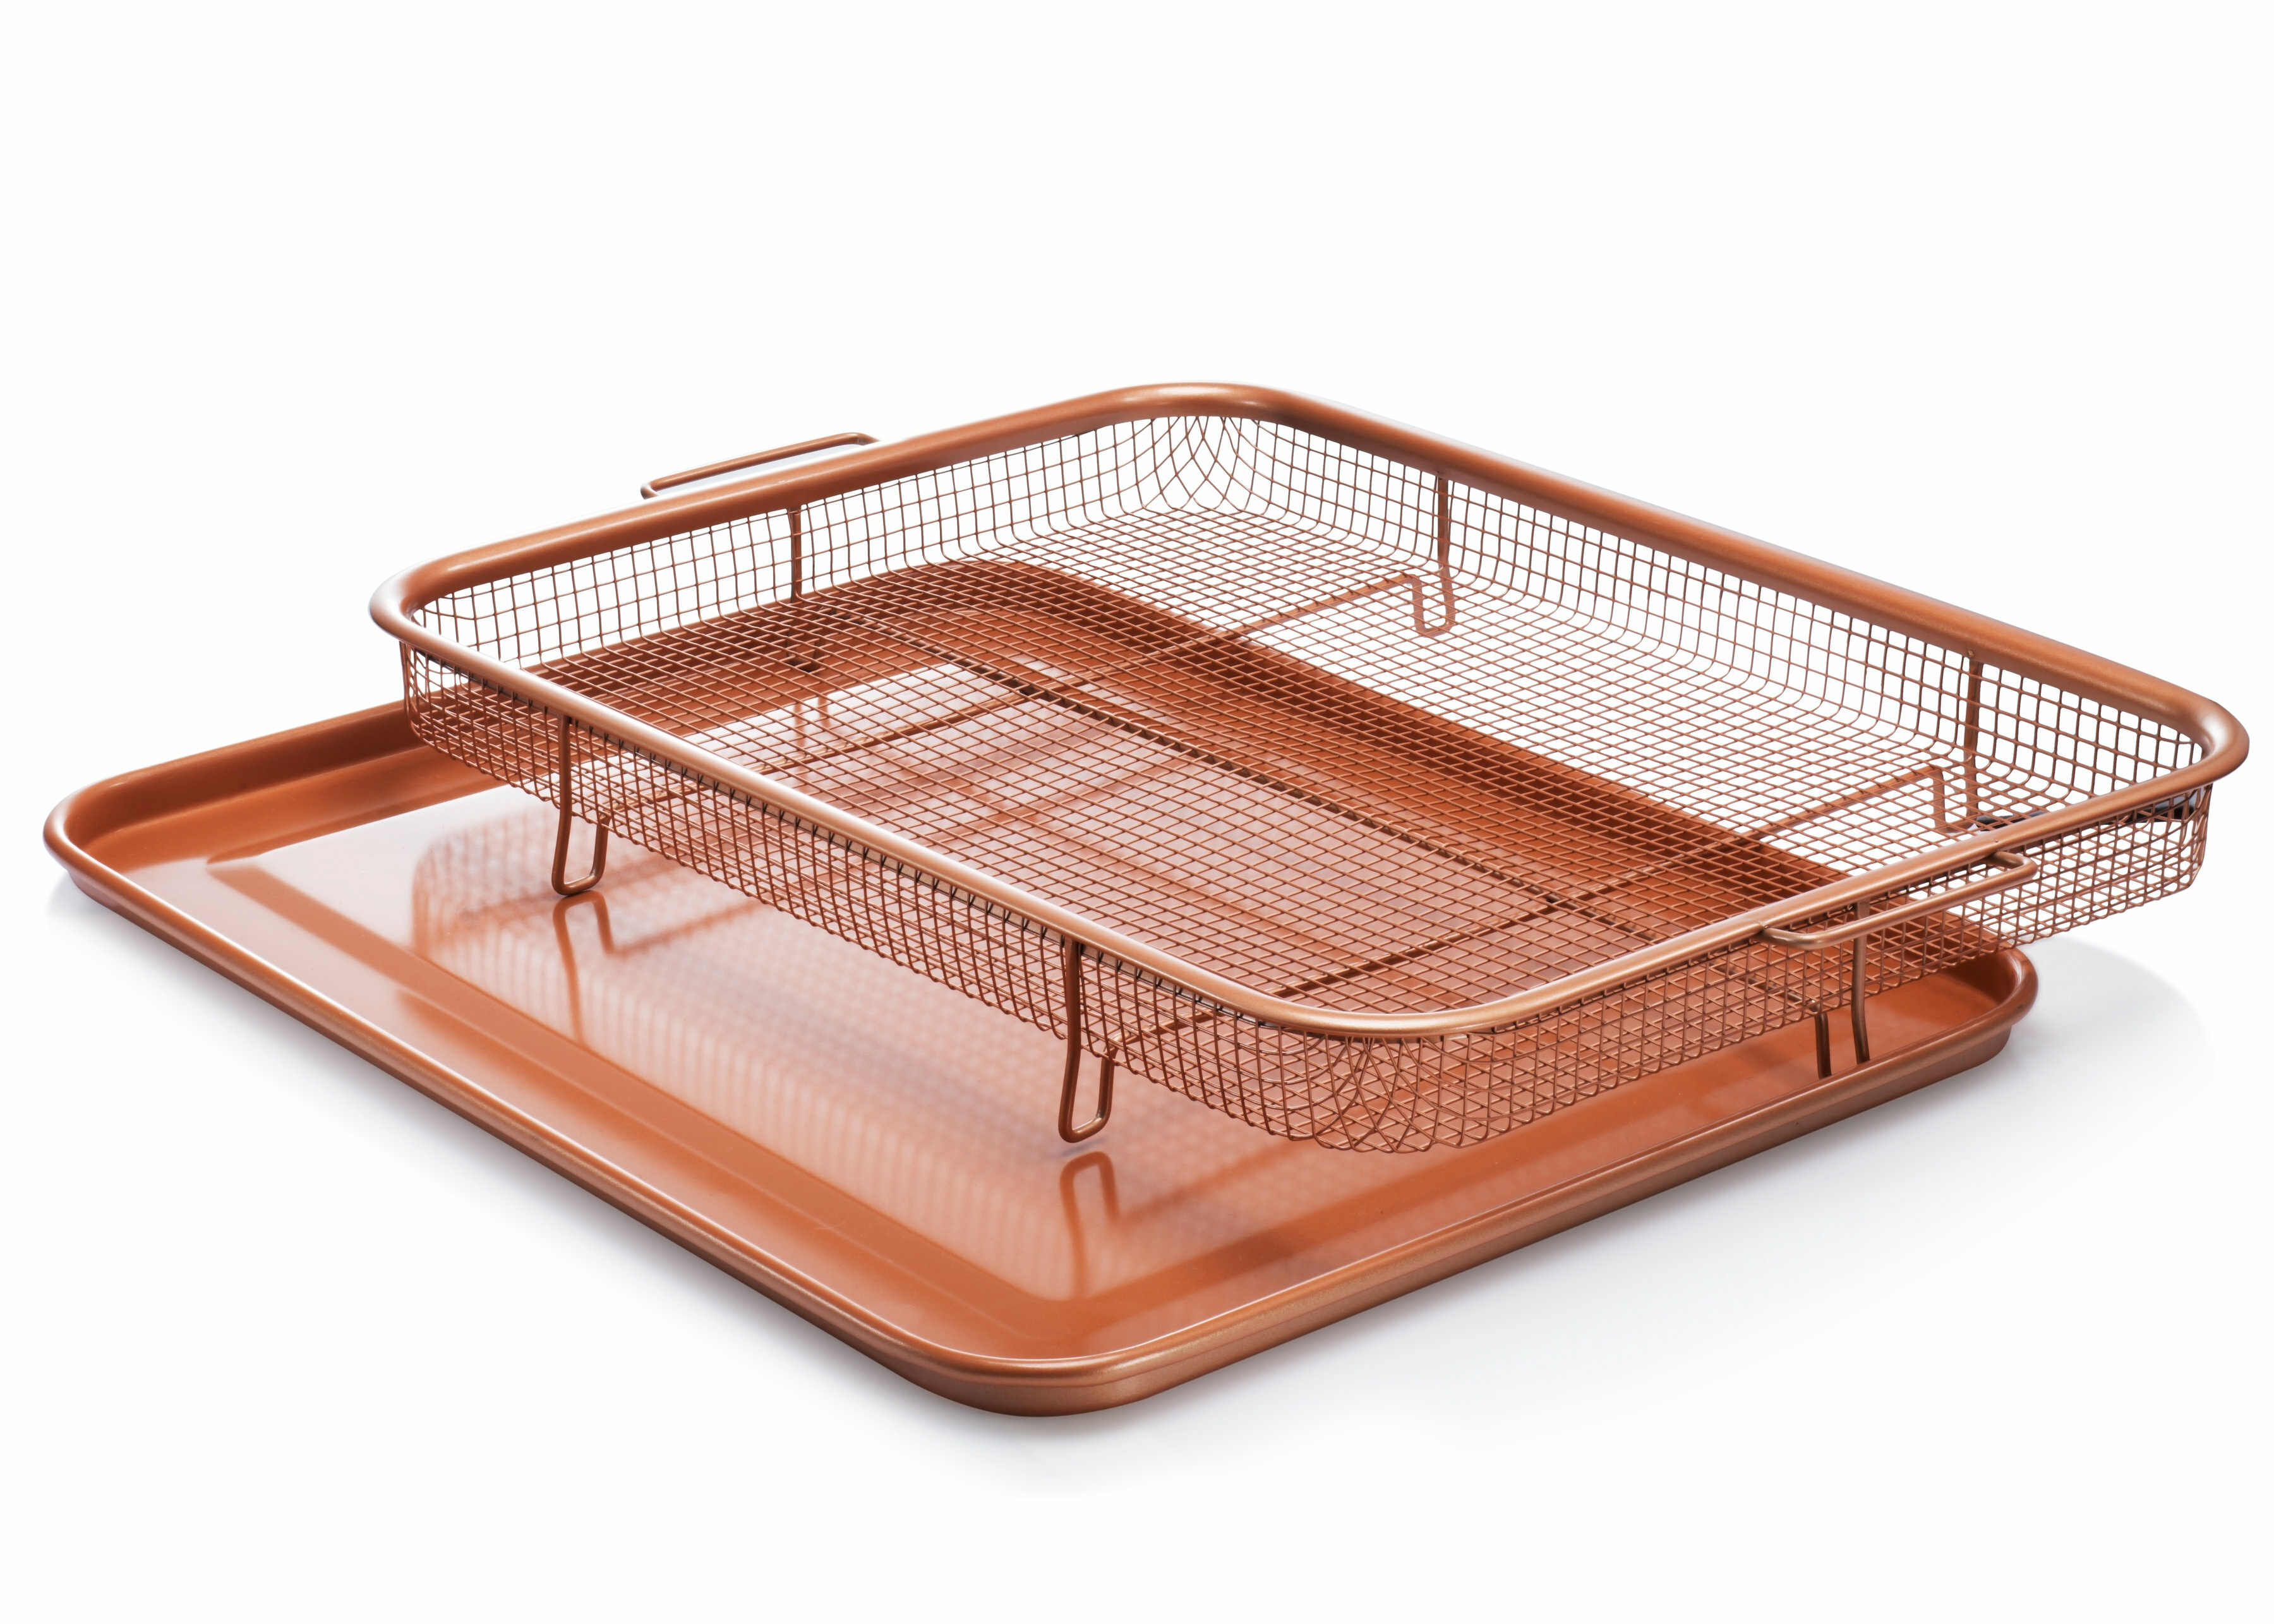 Copper Crisper Tray Pan Stainless Steel w/Basket Air Fryer in Oven Nonstick New 